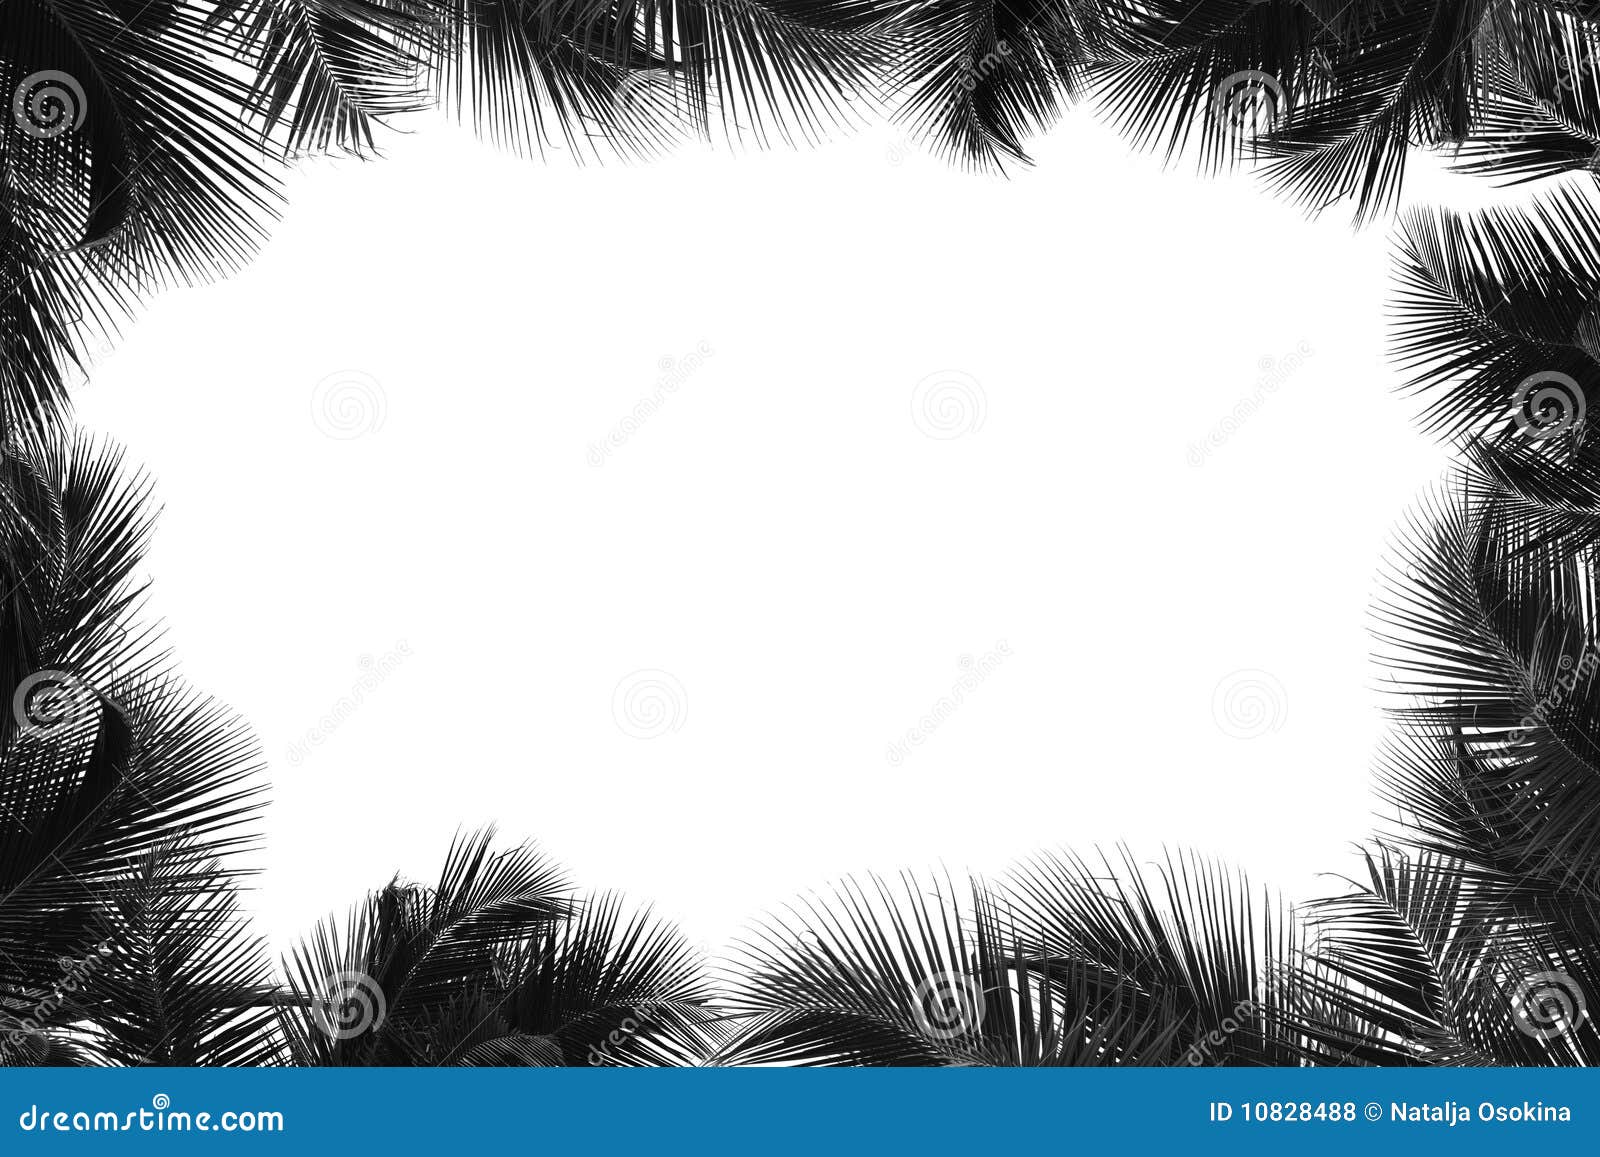 clipart palm tree borders - photo #40